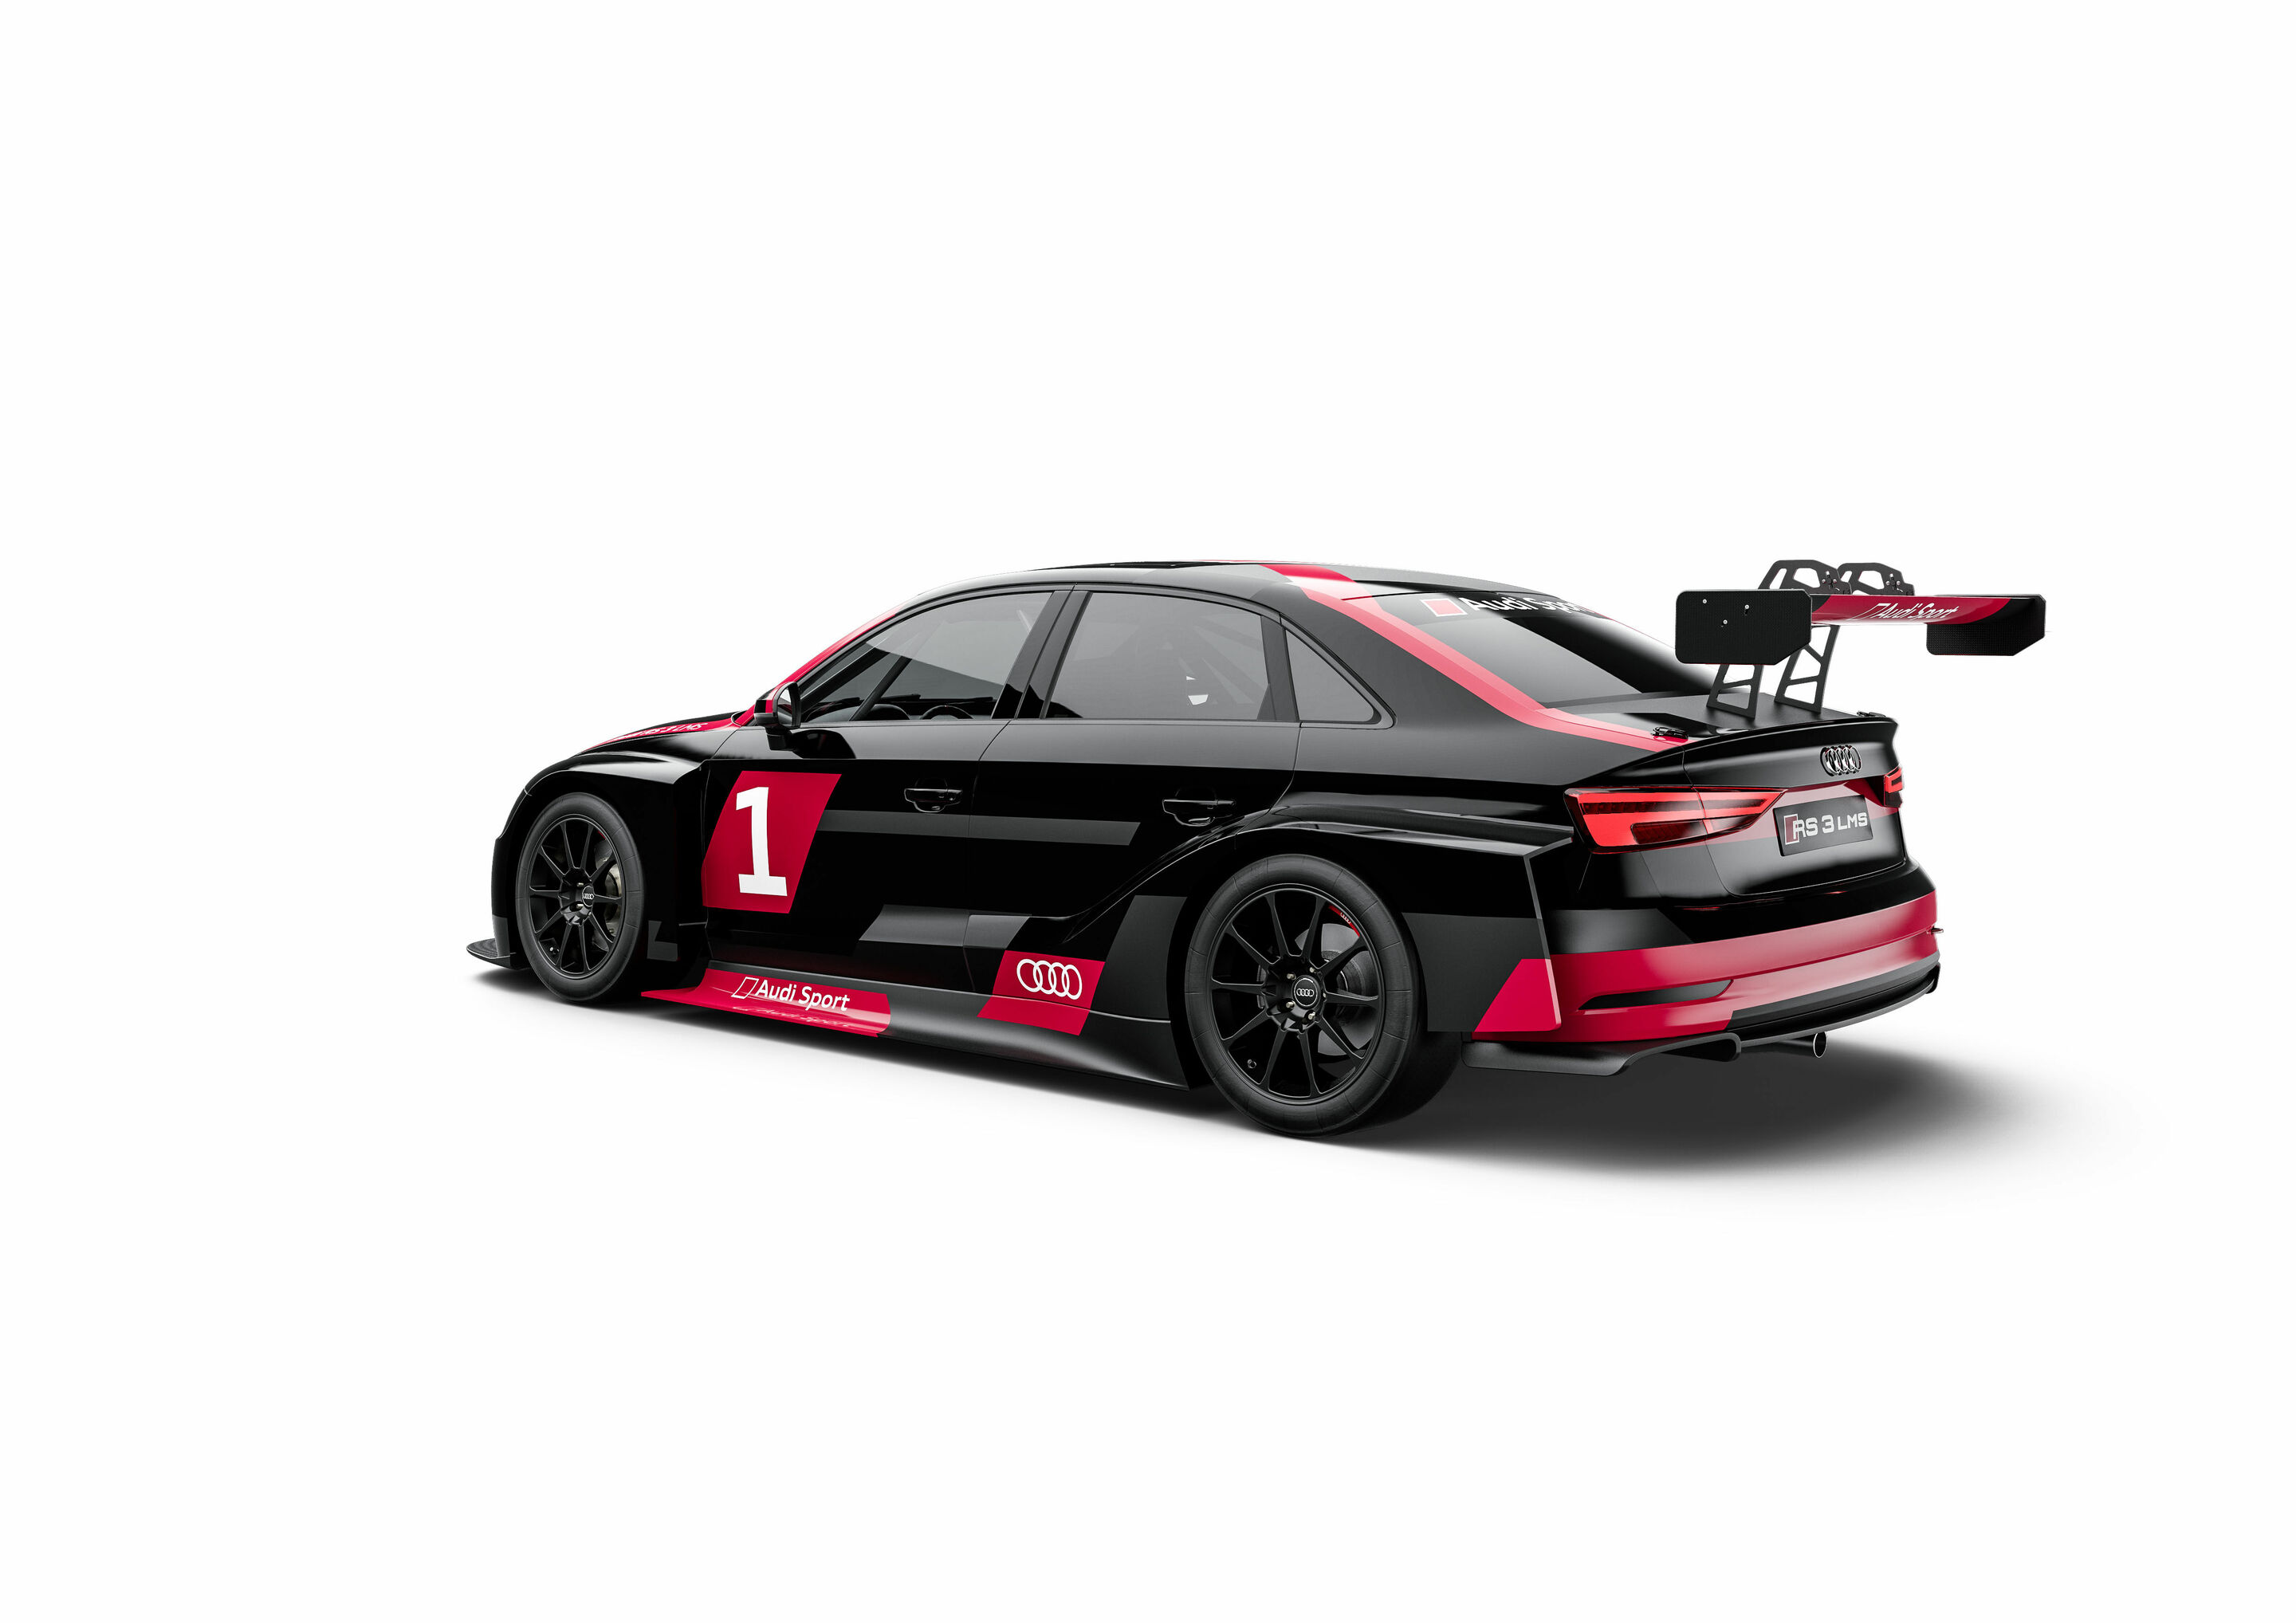 Audi RS 3 LMS 360 degrees